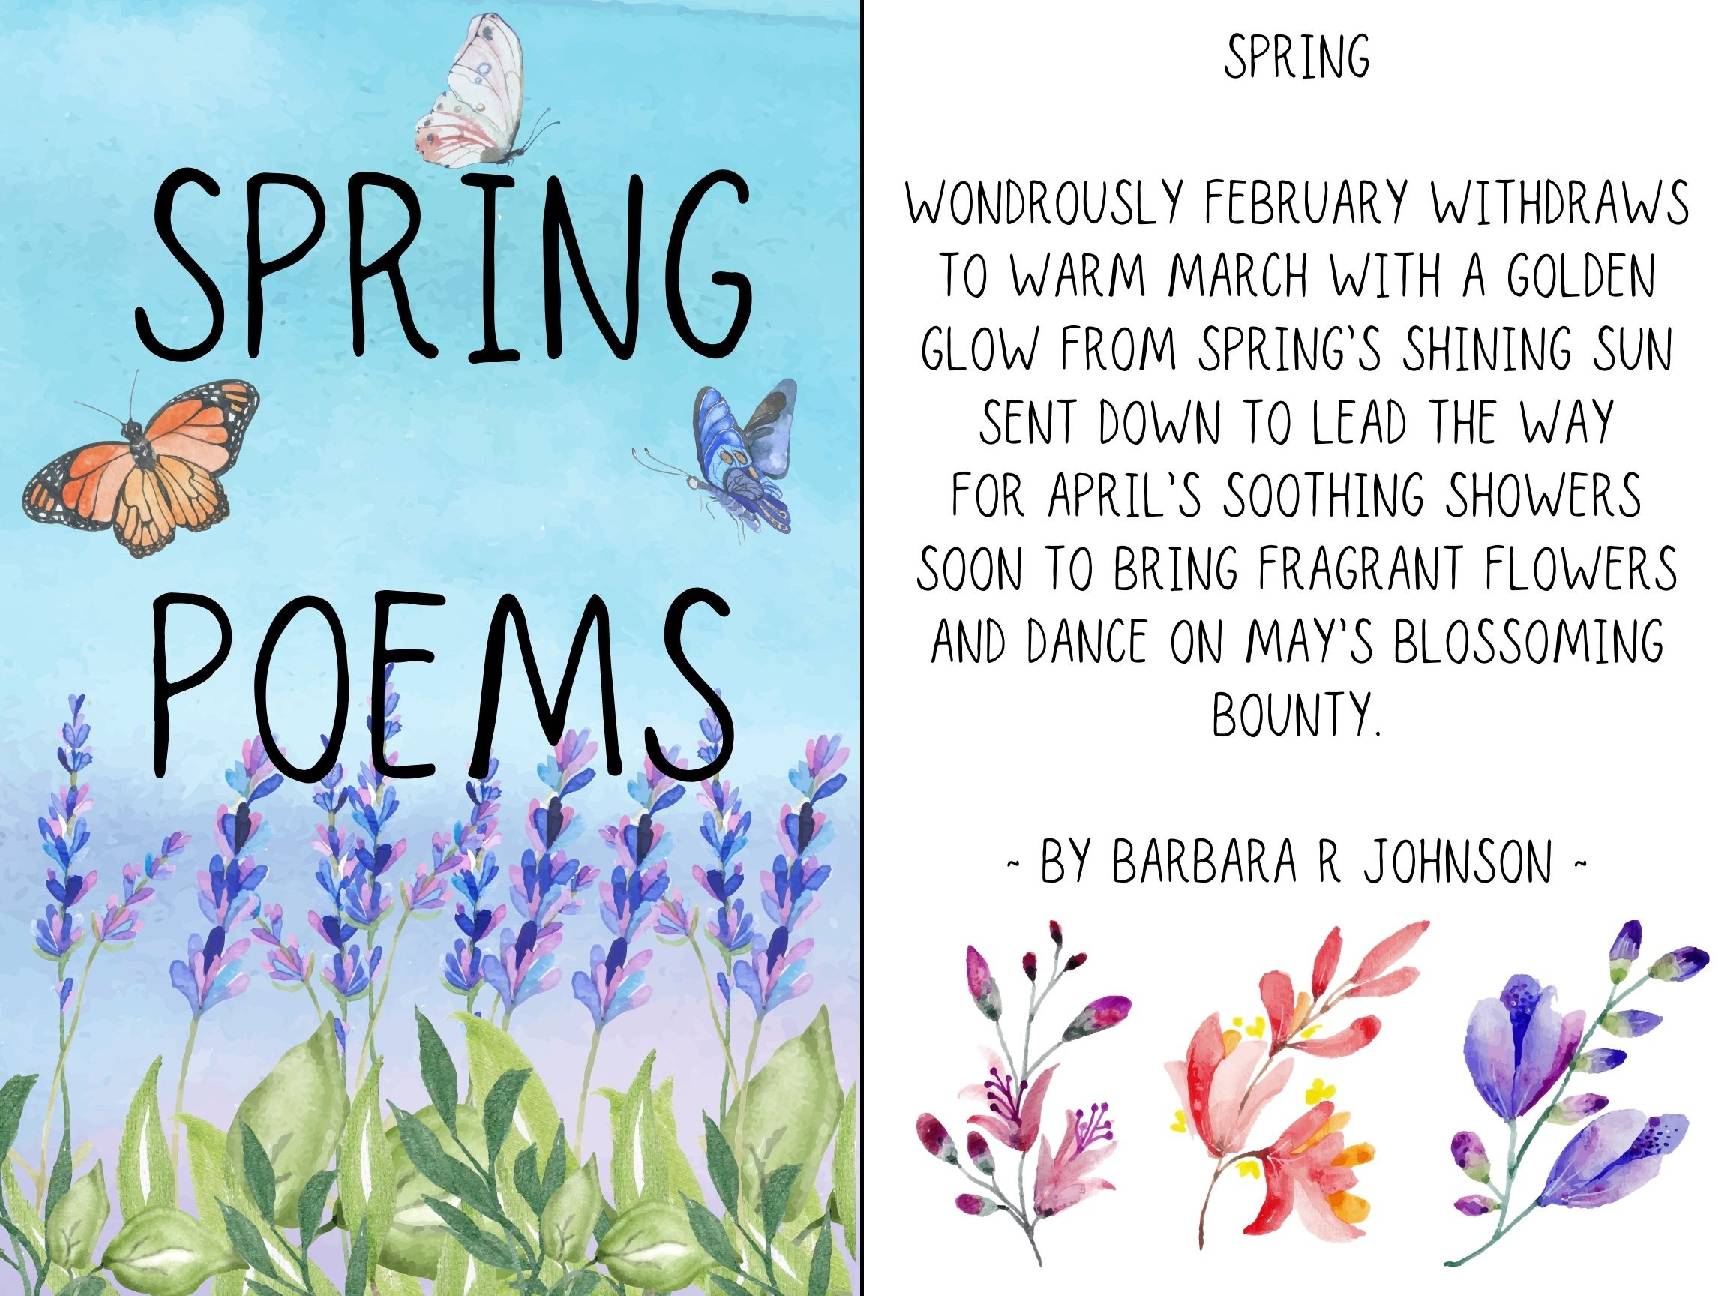 Spring Poems